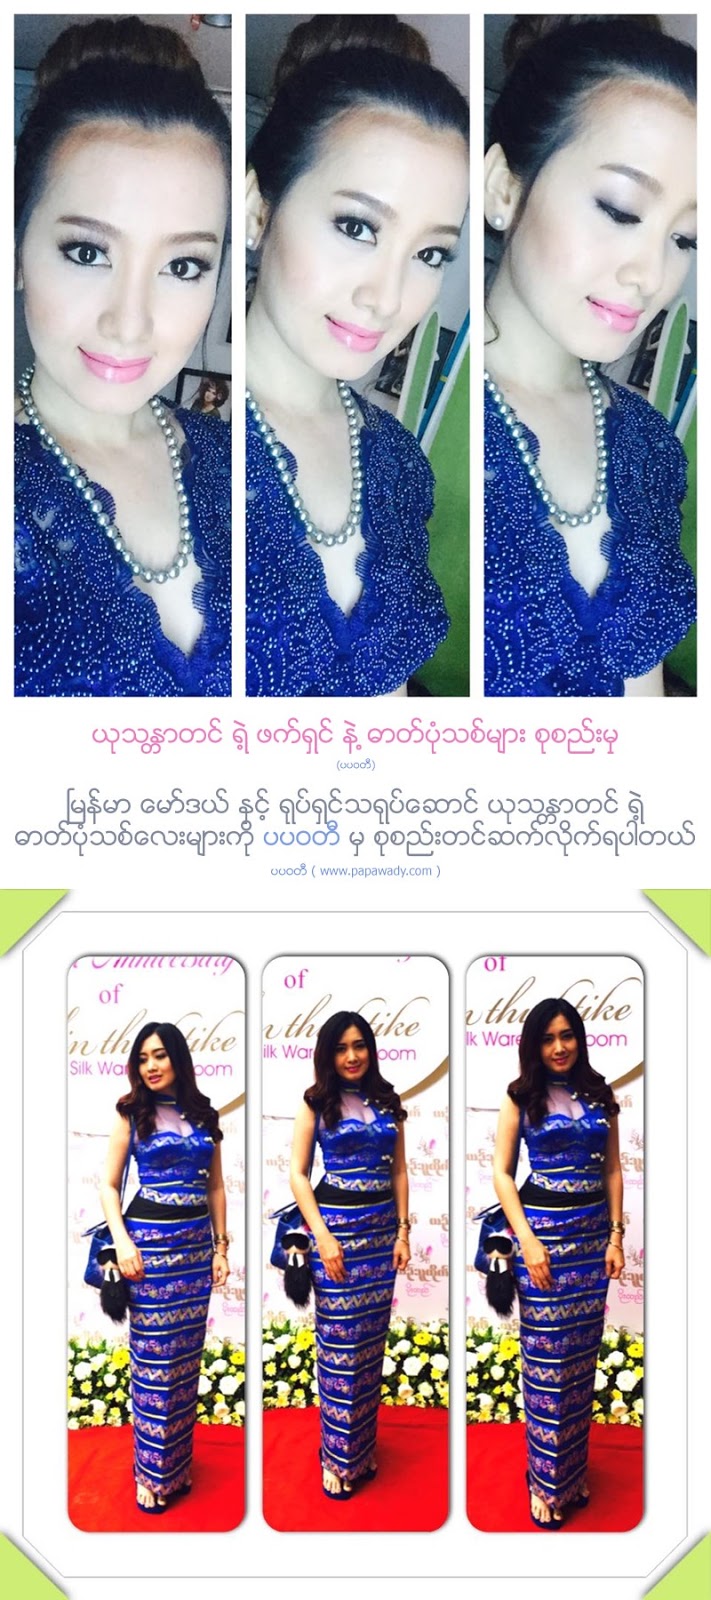 Yu Thandar Tin Beautiful Snapshot Photos in September and November 2015